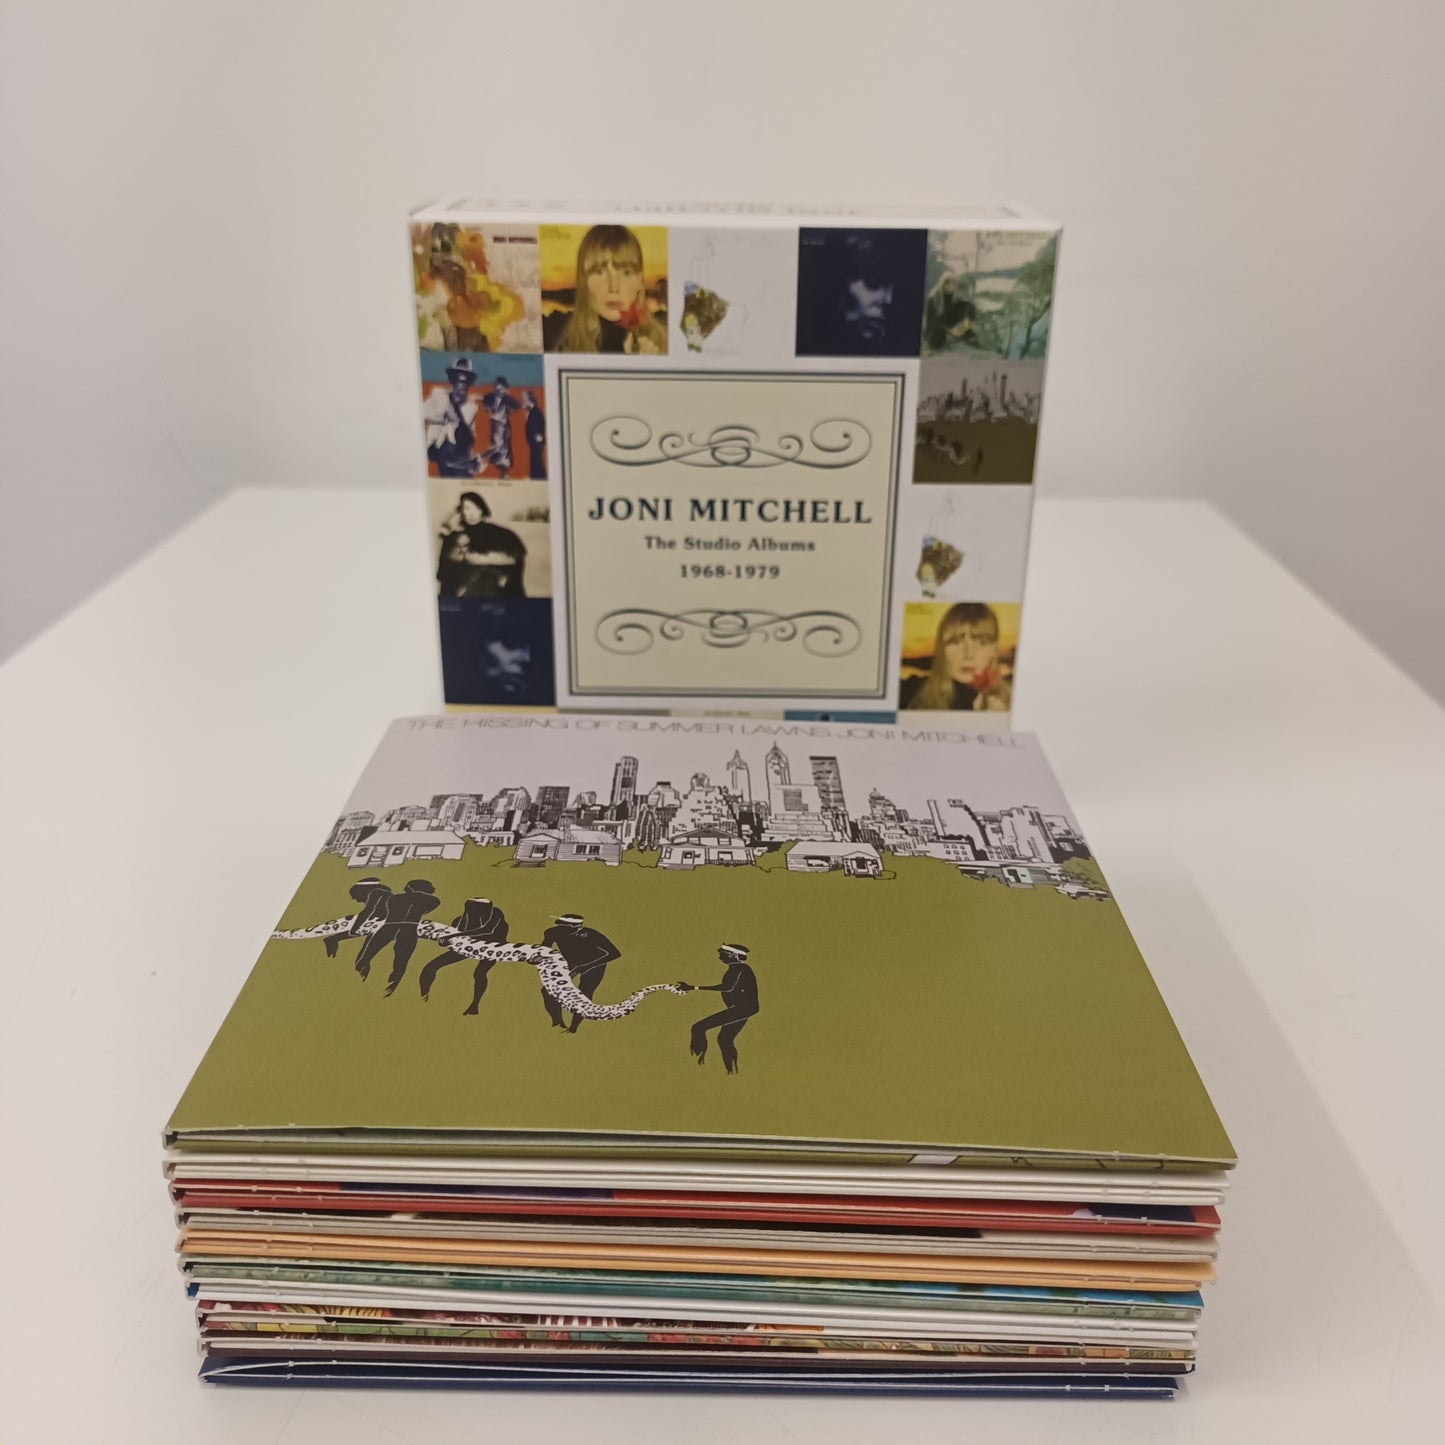 Joni Mitchell The Studio Albums 1968-1979 CD Box Set